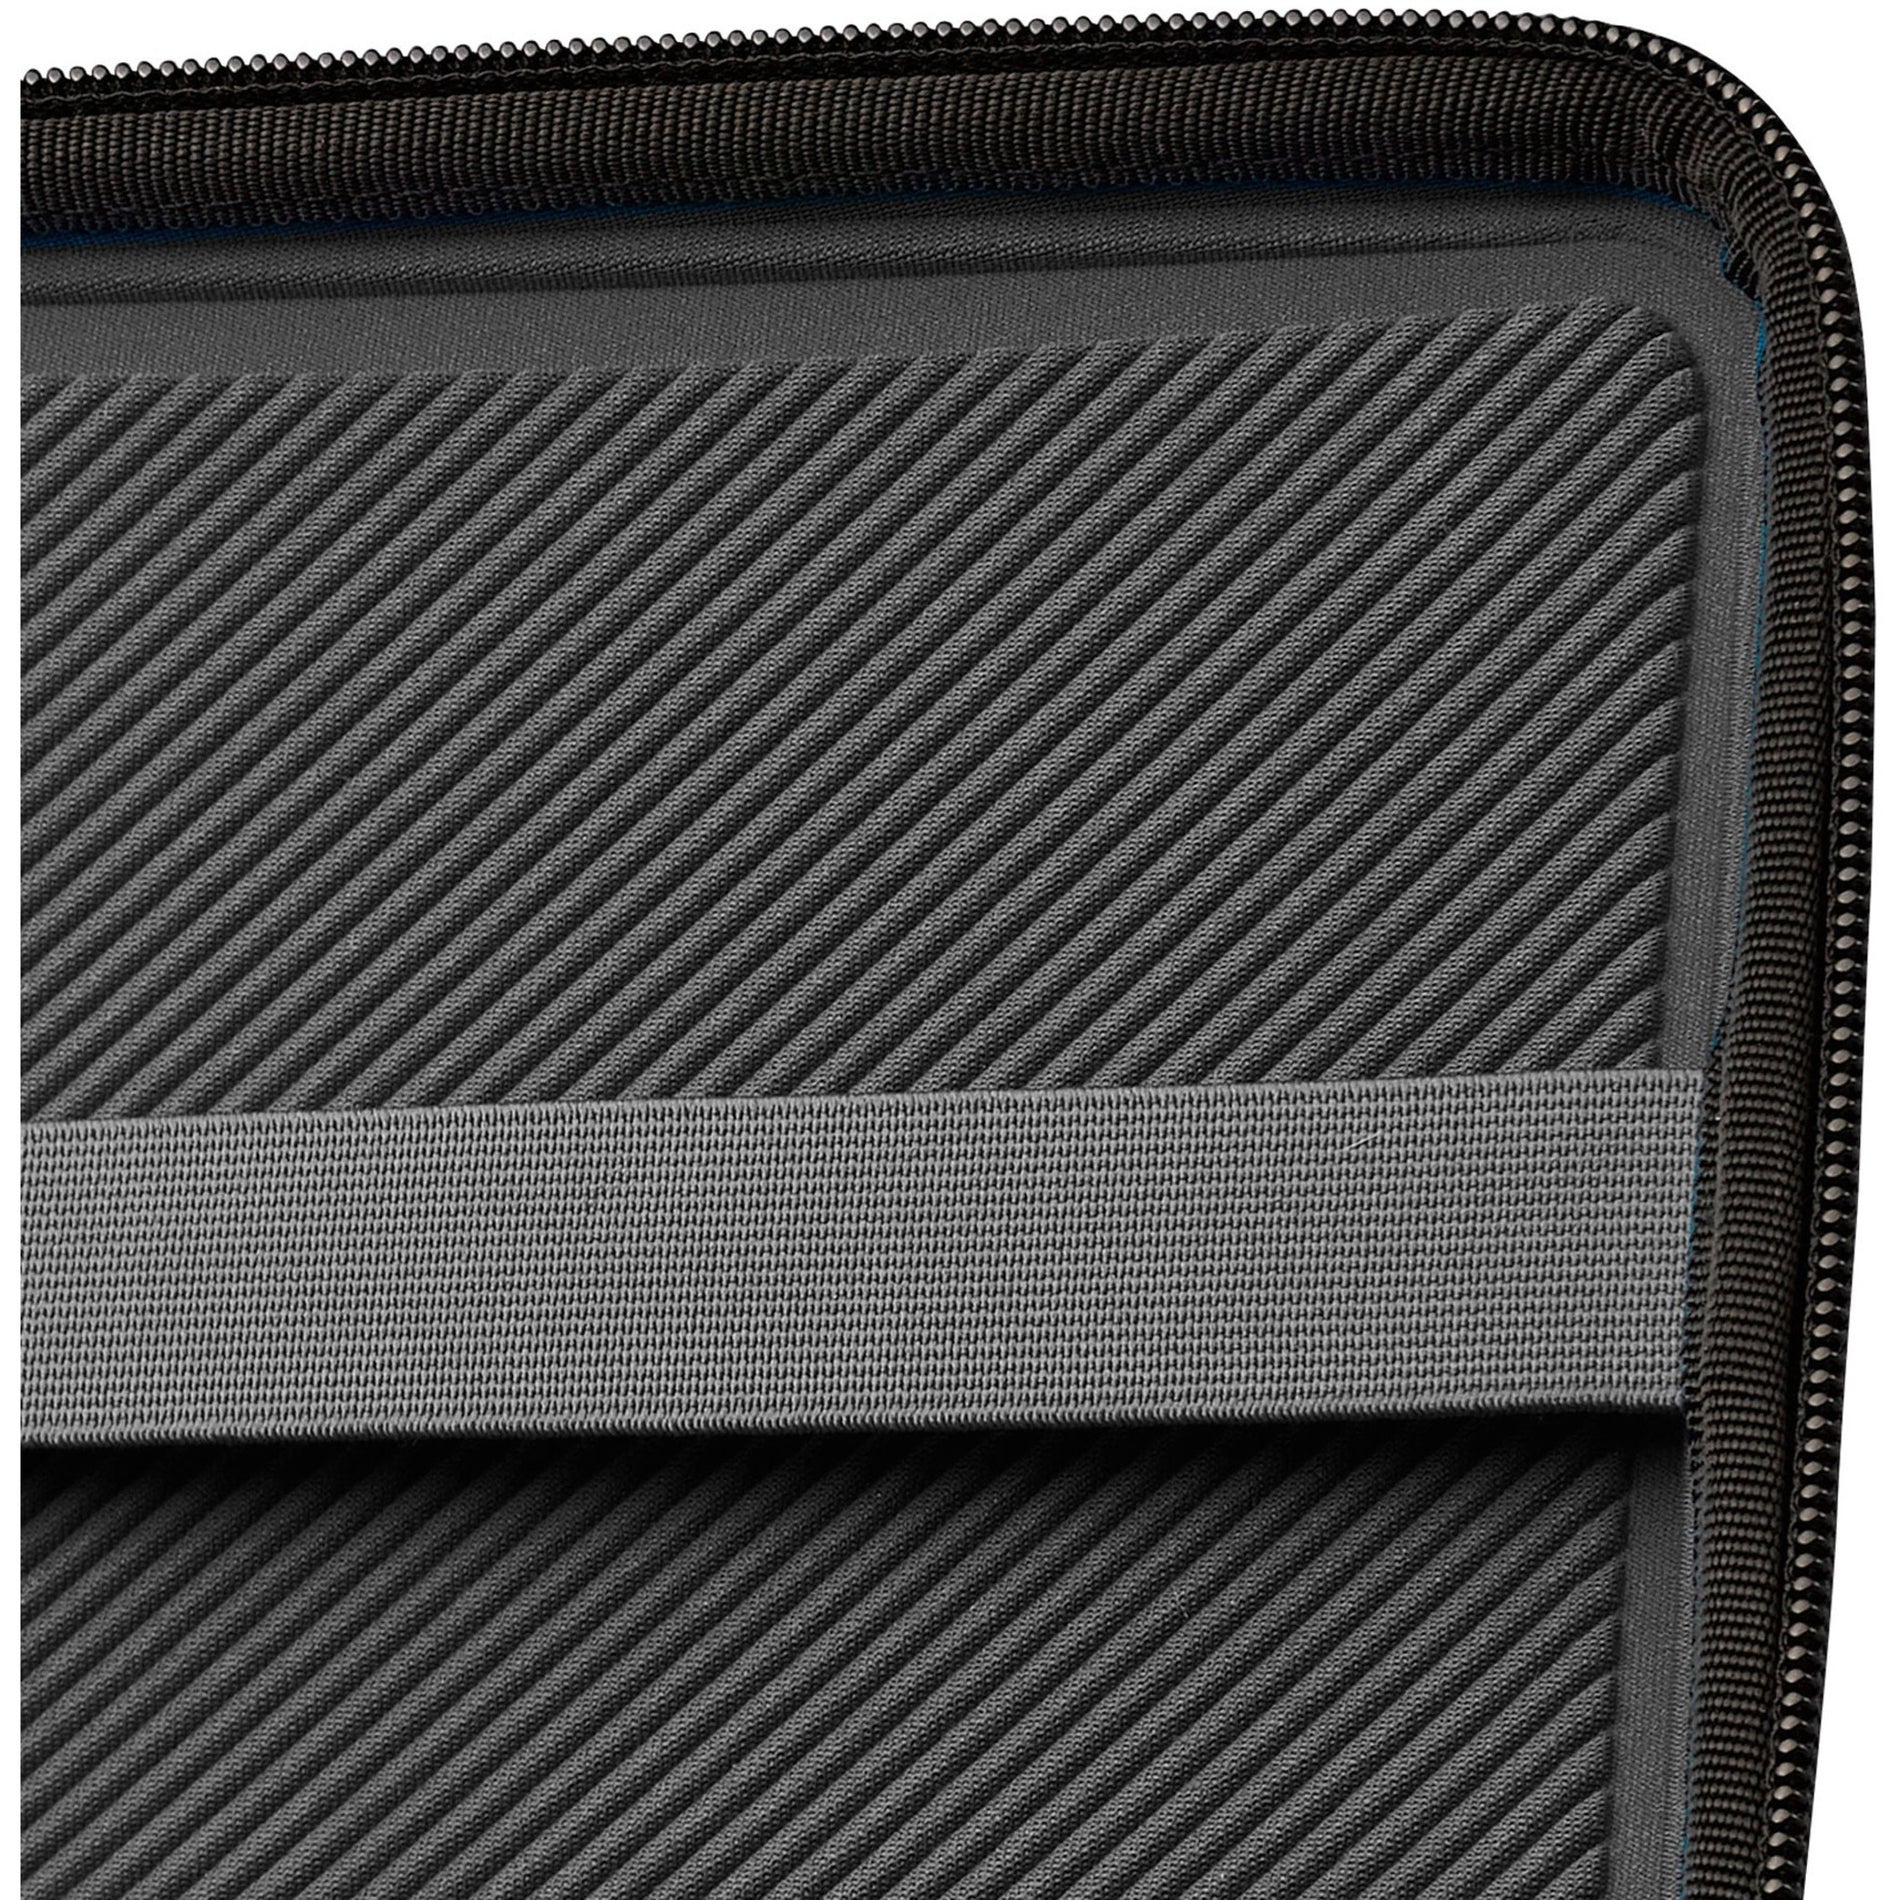 Case Logic 3201315 Portable Hard Drive Case, EVA Foam, Dark Blue - 25 Year Warranty